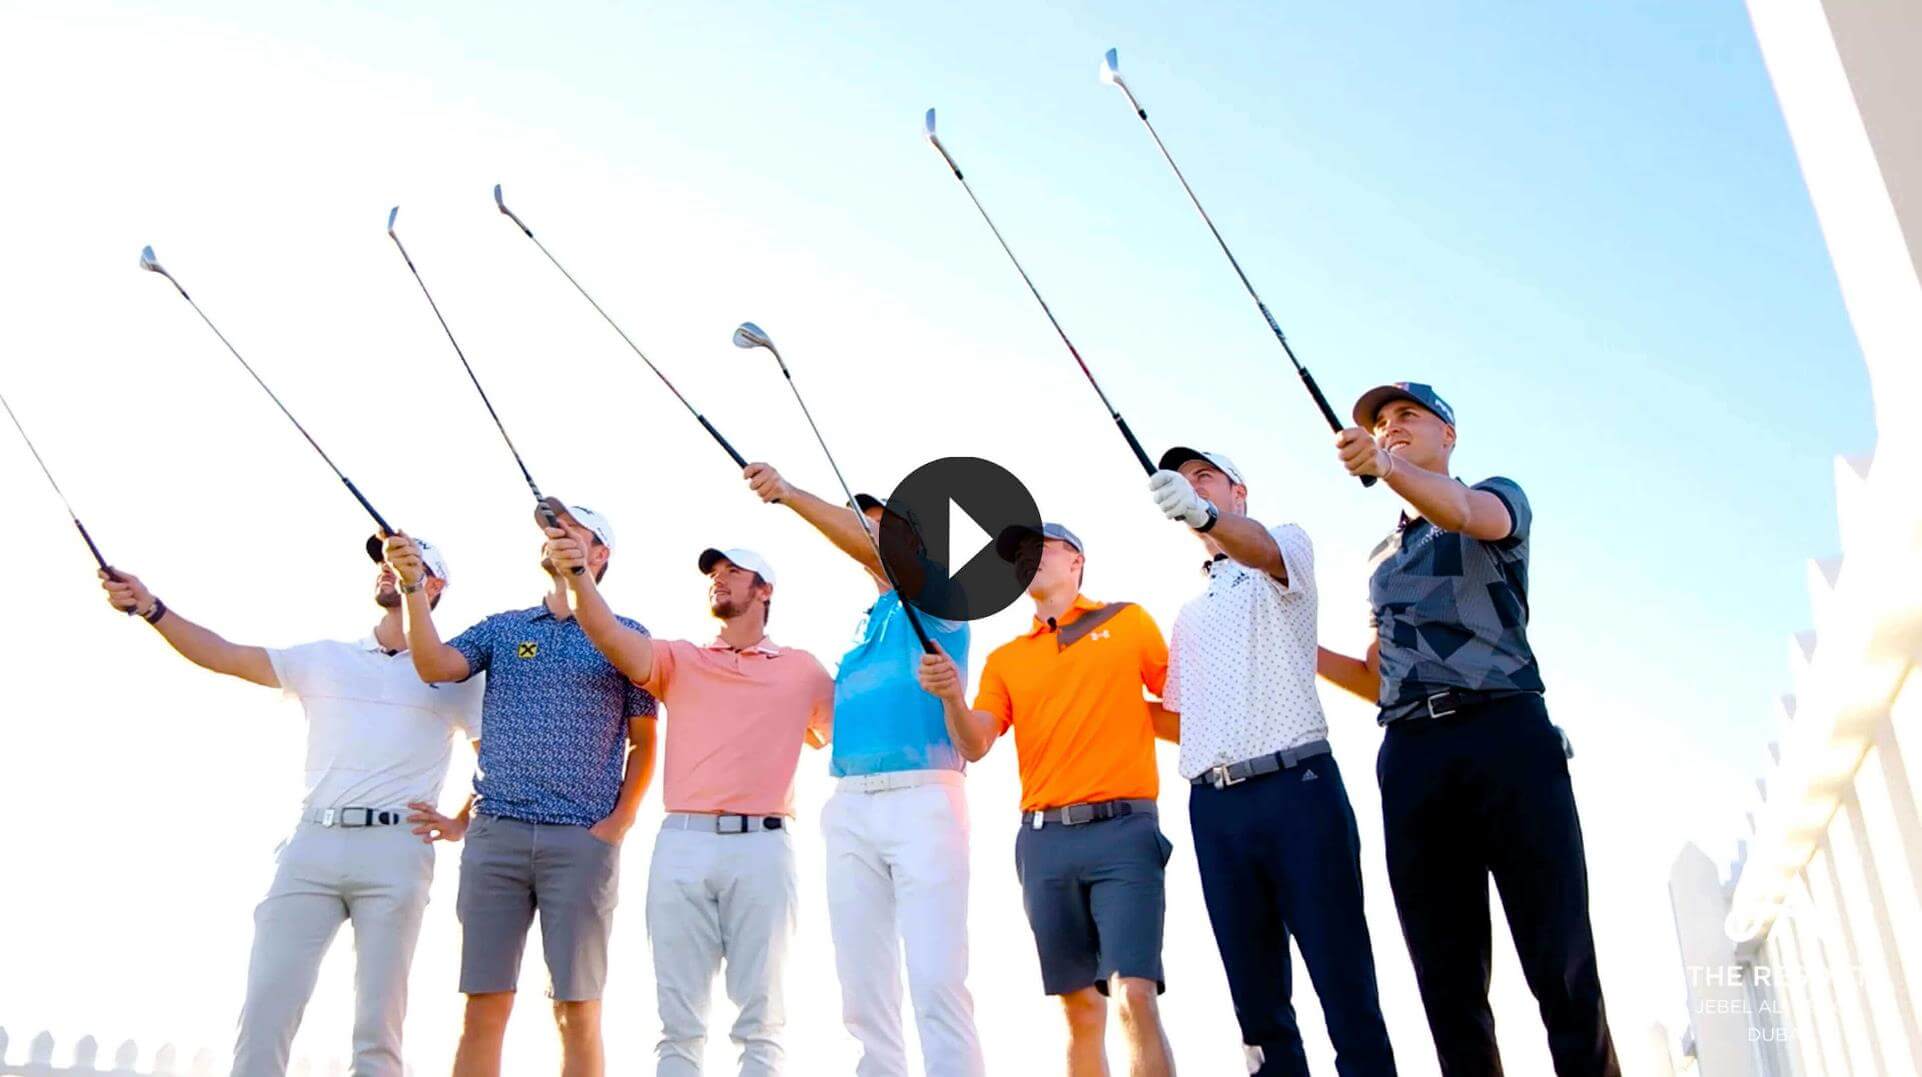 ja-the-resort-golf-video-thumbnail